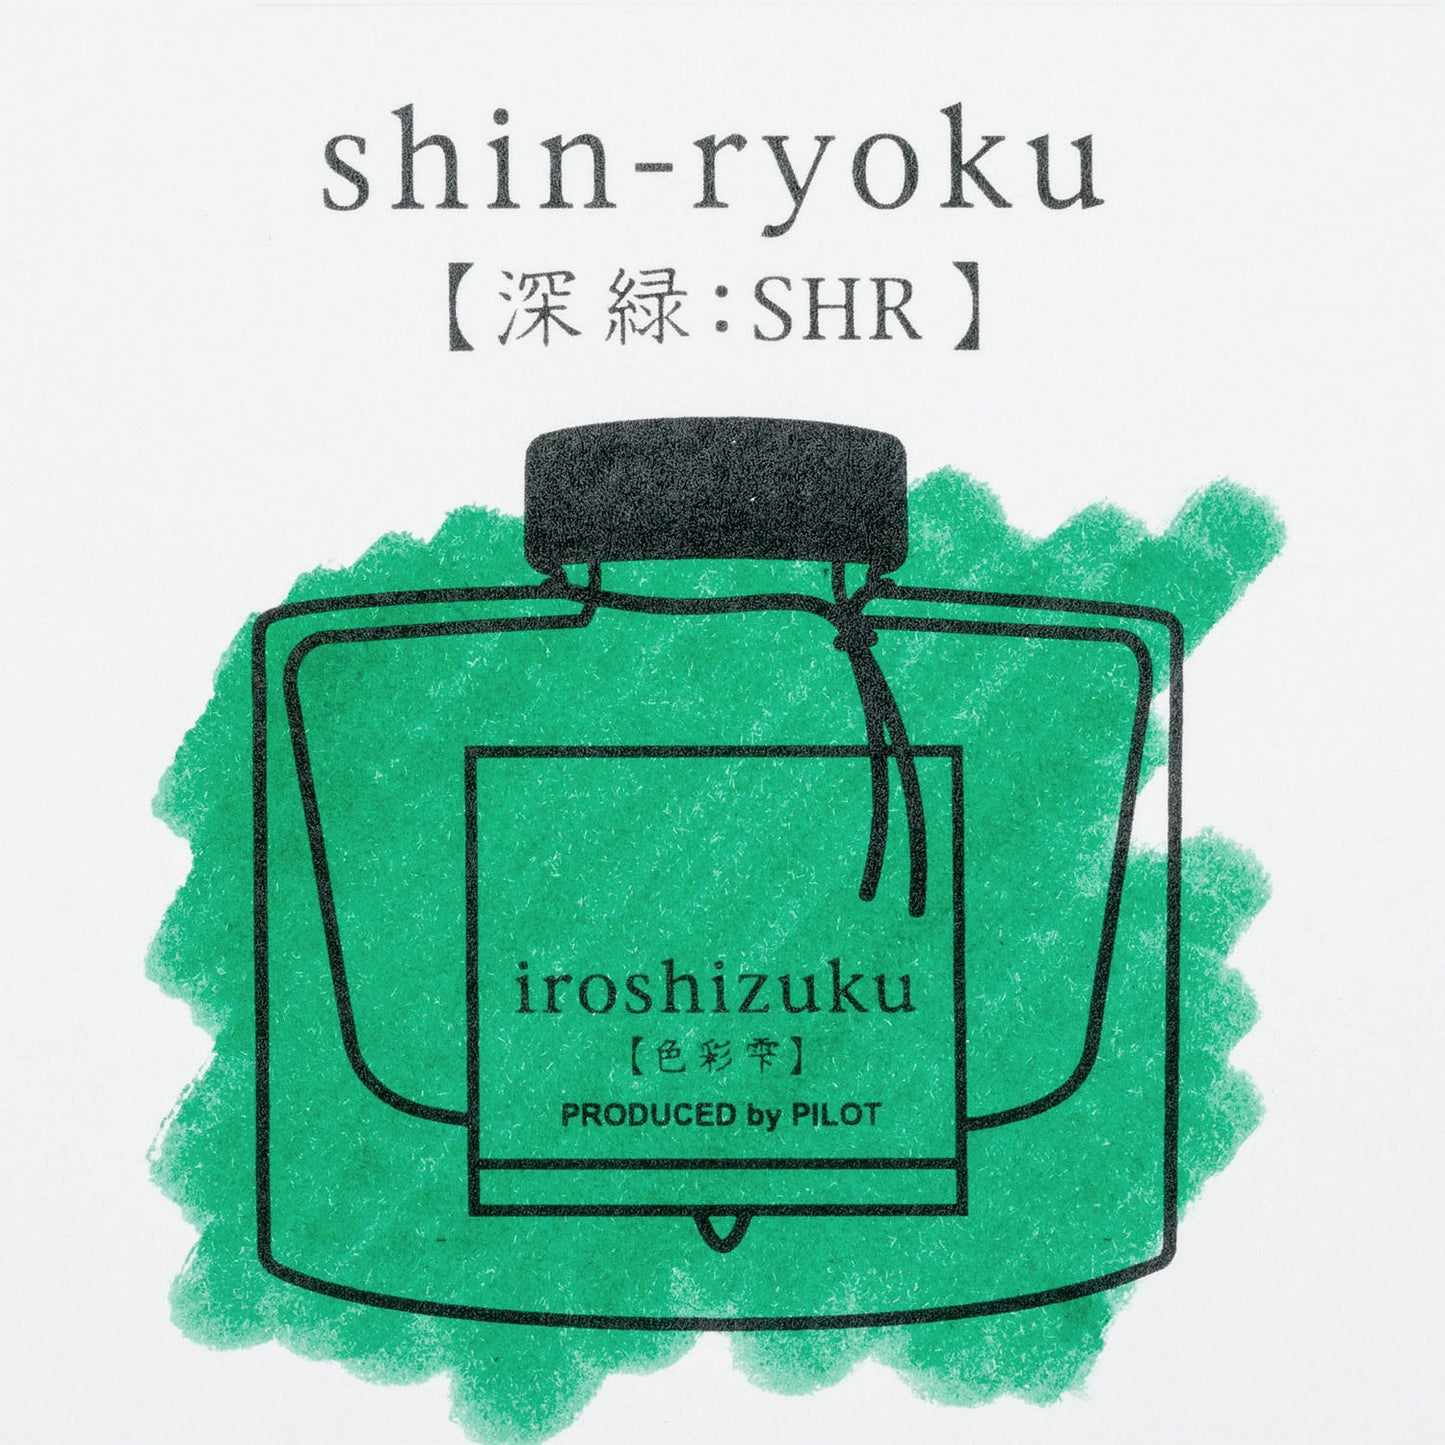 Pilot Iroshizuku Fountain Pen Ink - Shin-ryoku (Forest Green) - Sample